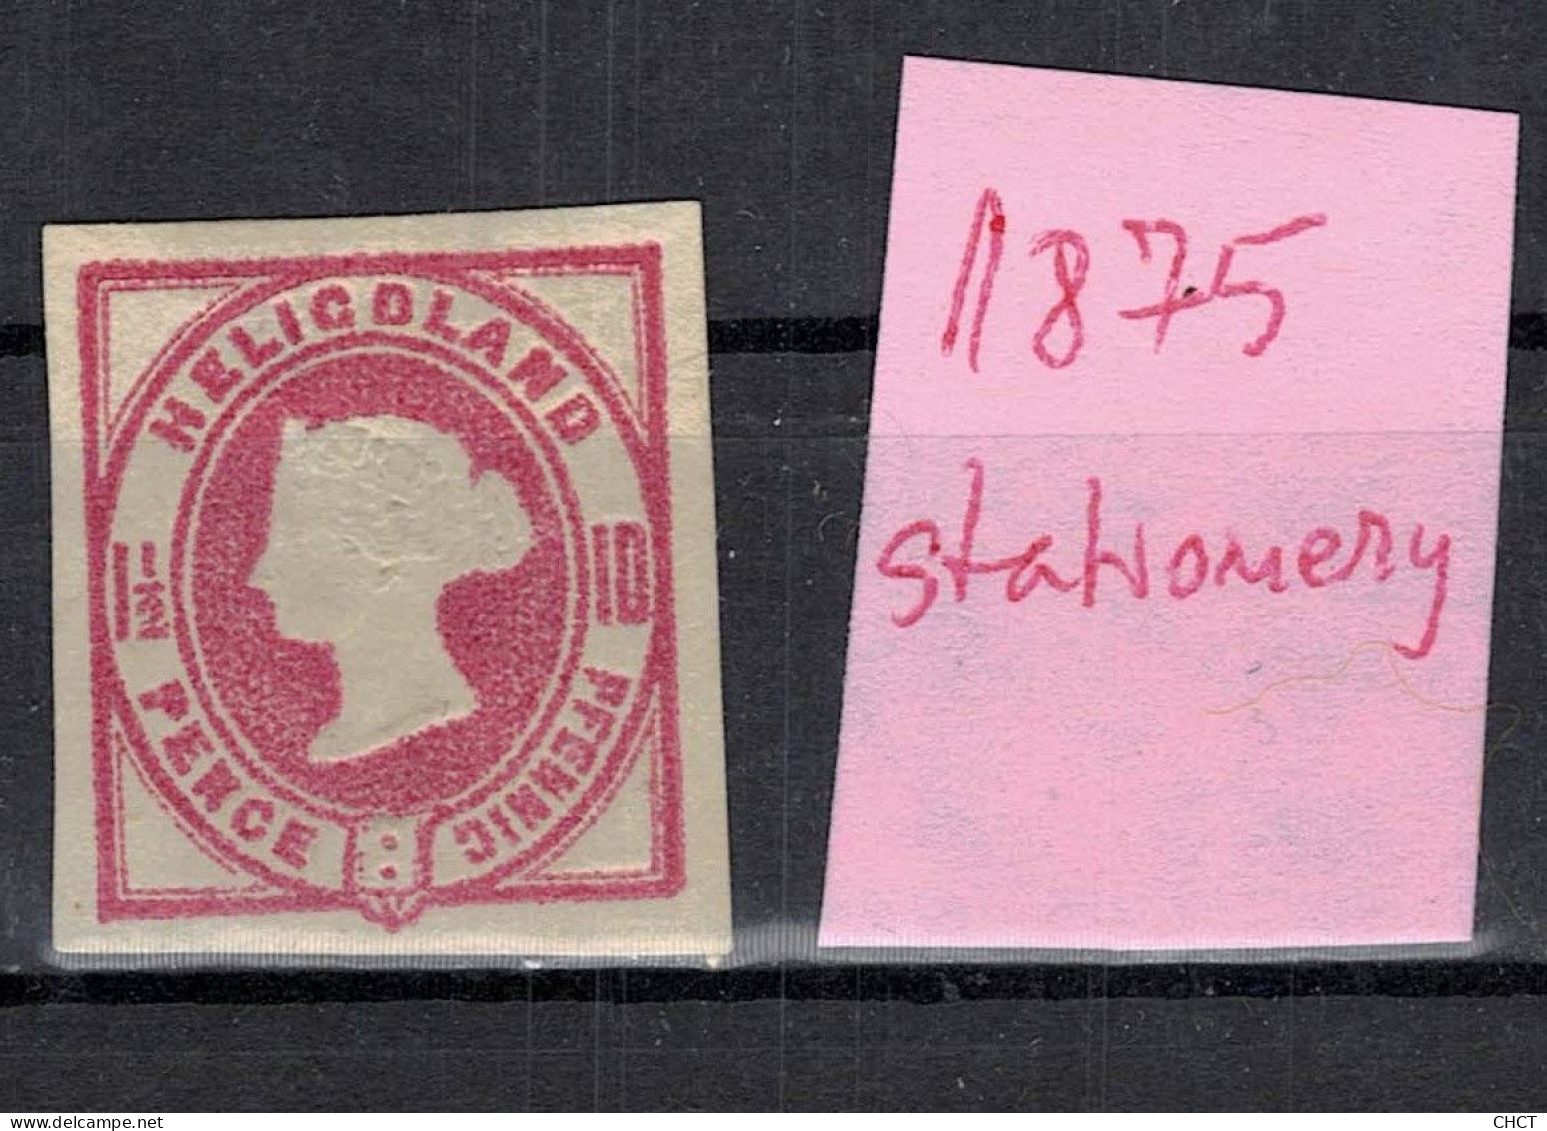 CHCT9 - 1 1/2 Pence, Stationery Cut Out, 1875, Helgoland, Heligoland, Germany - Héligoland